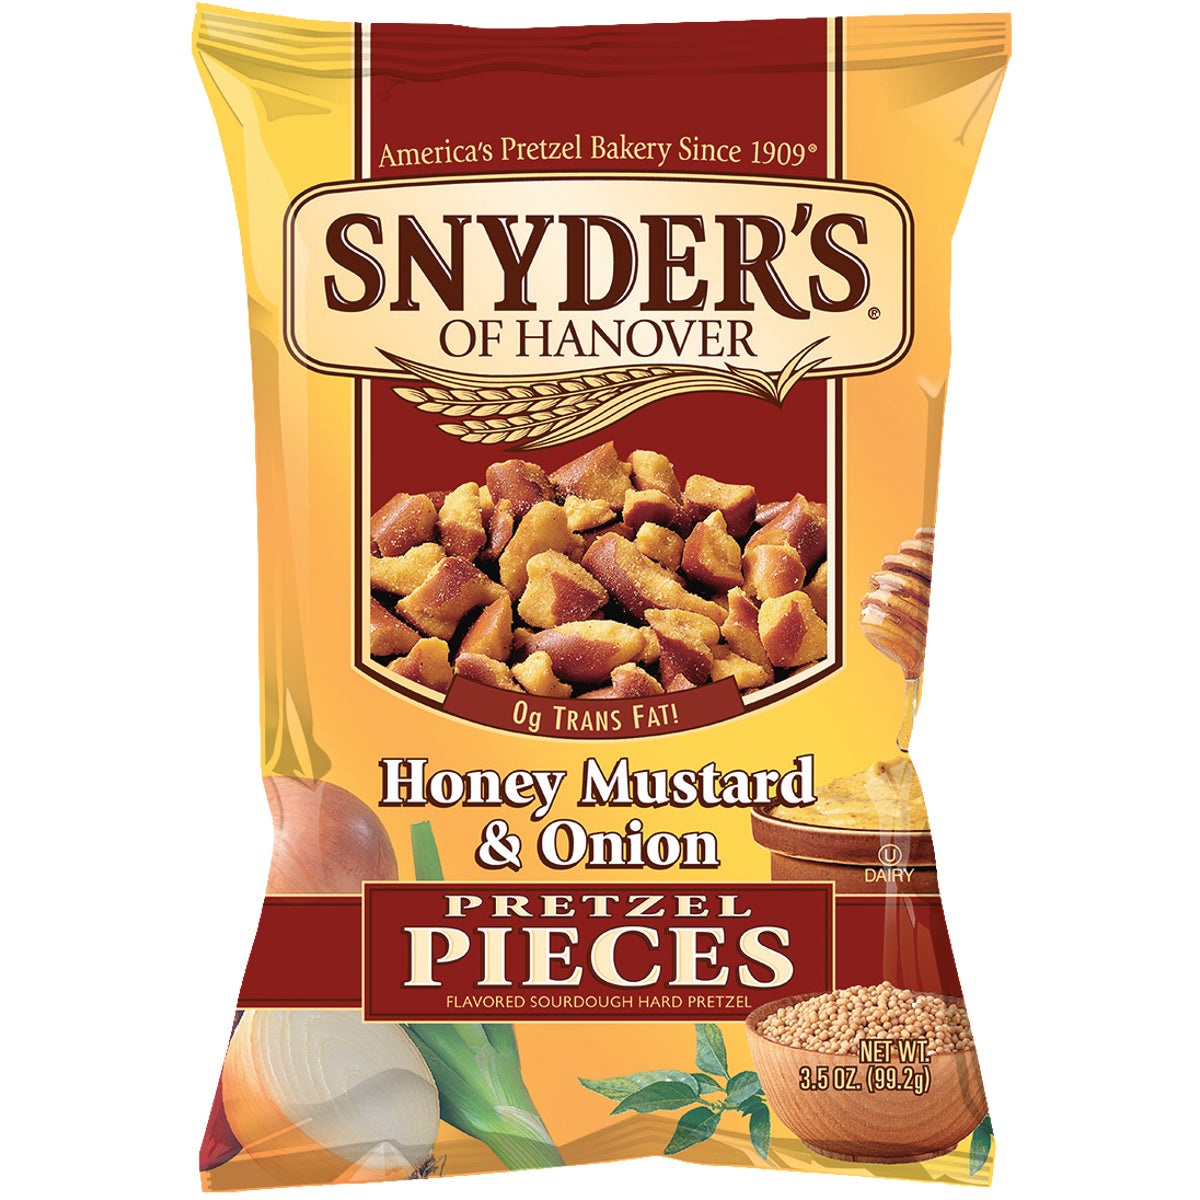 Snyder's of Hanover 121201 Snyder's of Hanover 3.5 Oz. Honey Mustard & Onion Pretzels 121201 Pack of 8